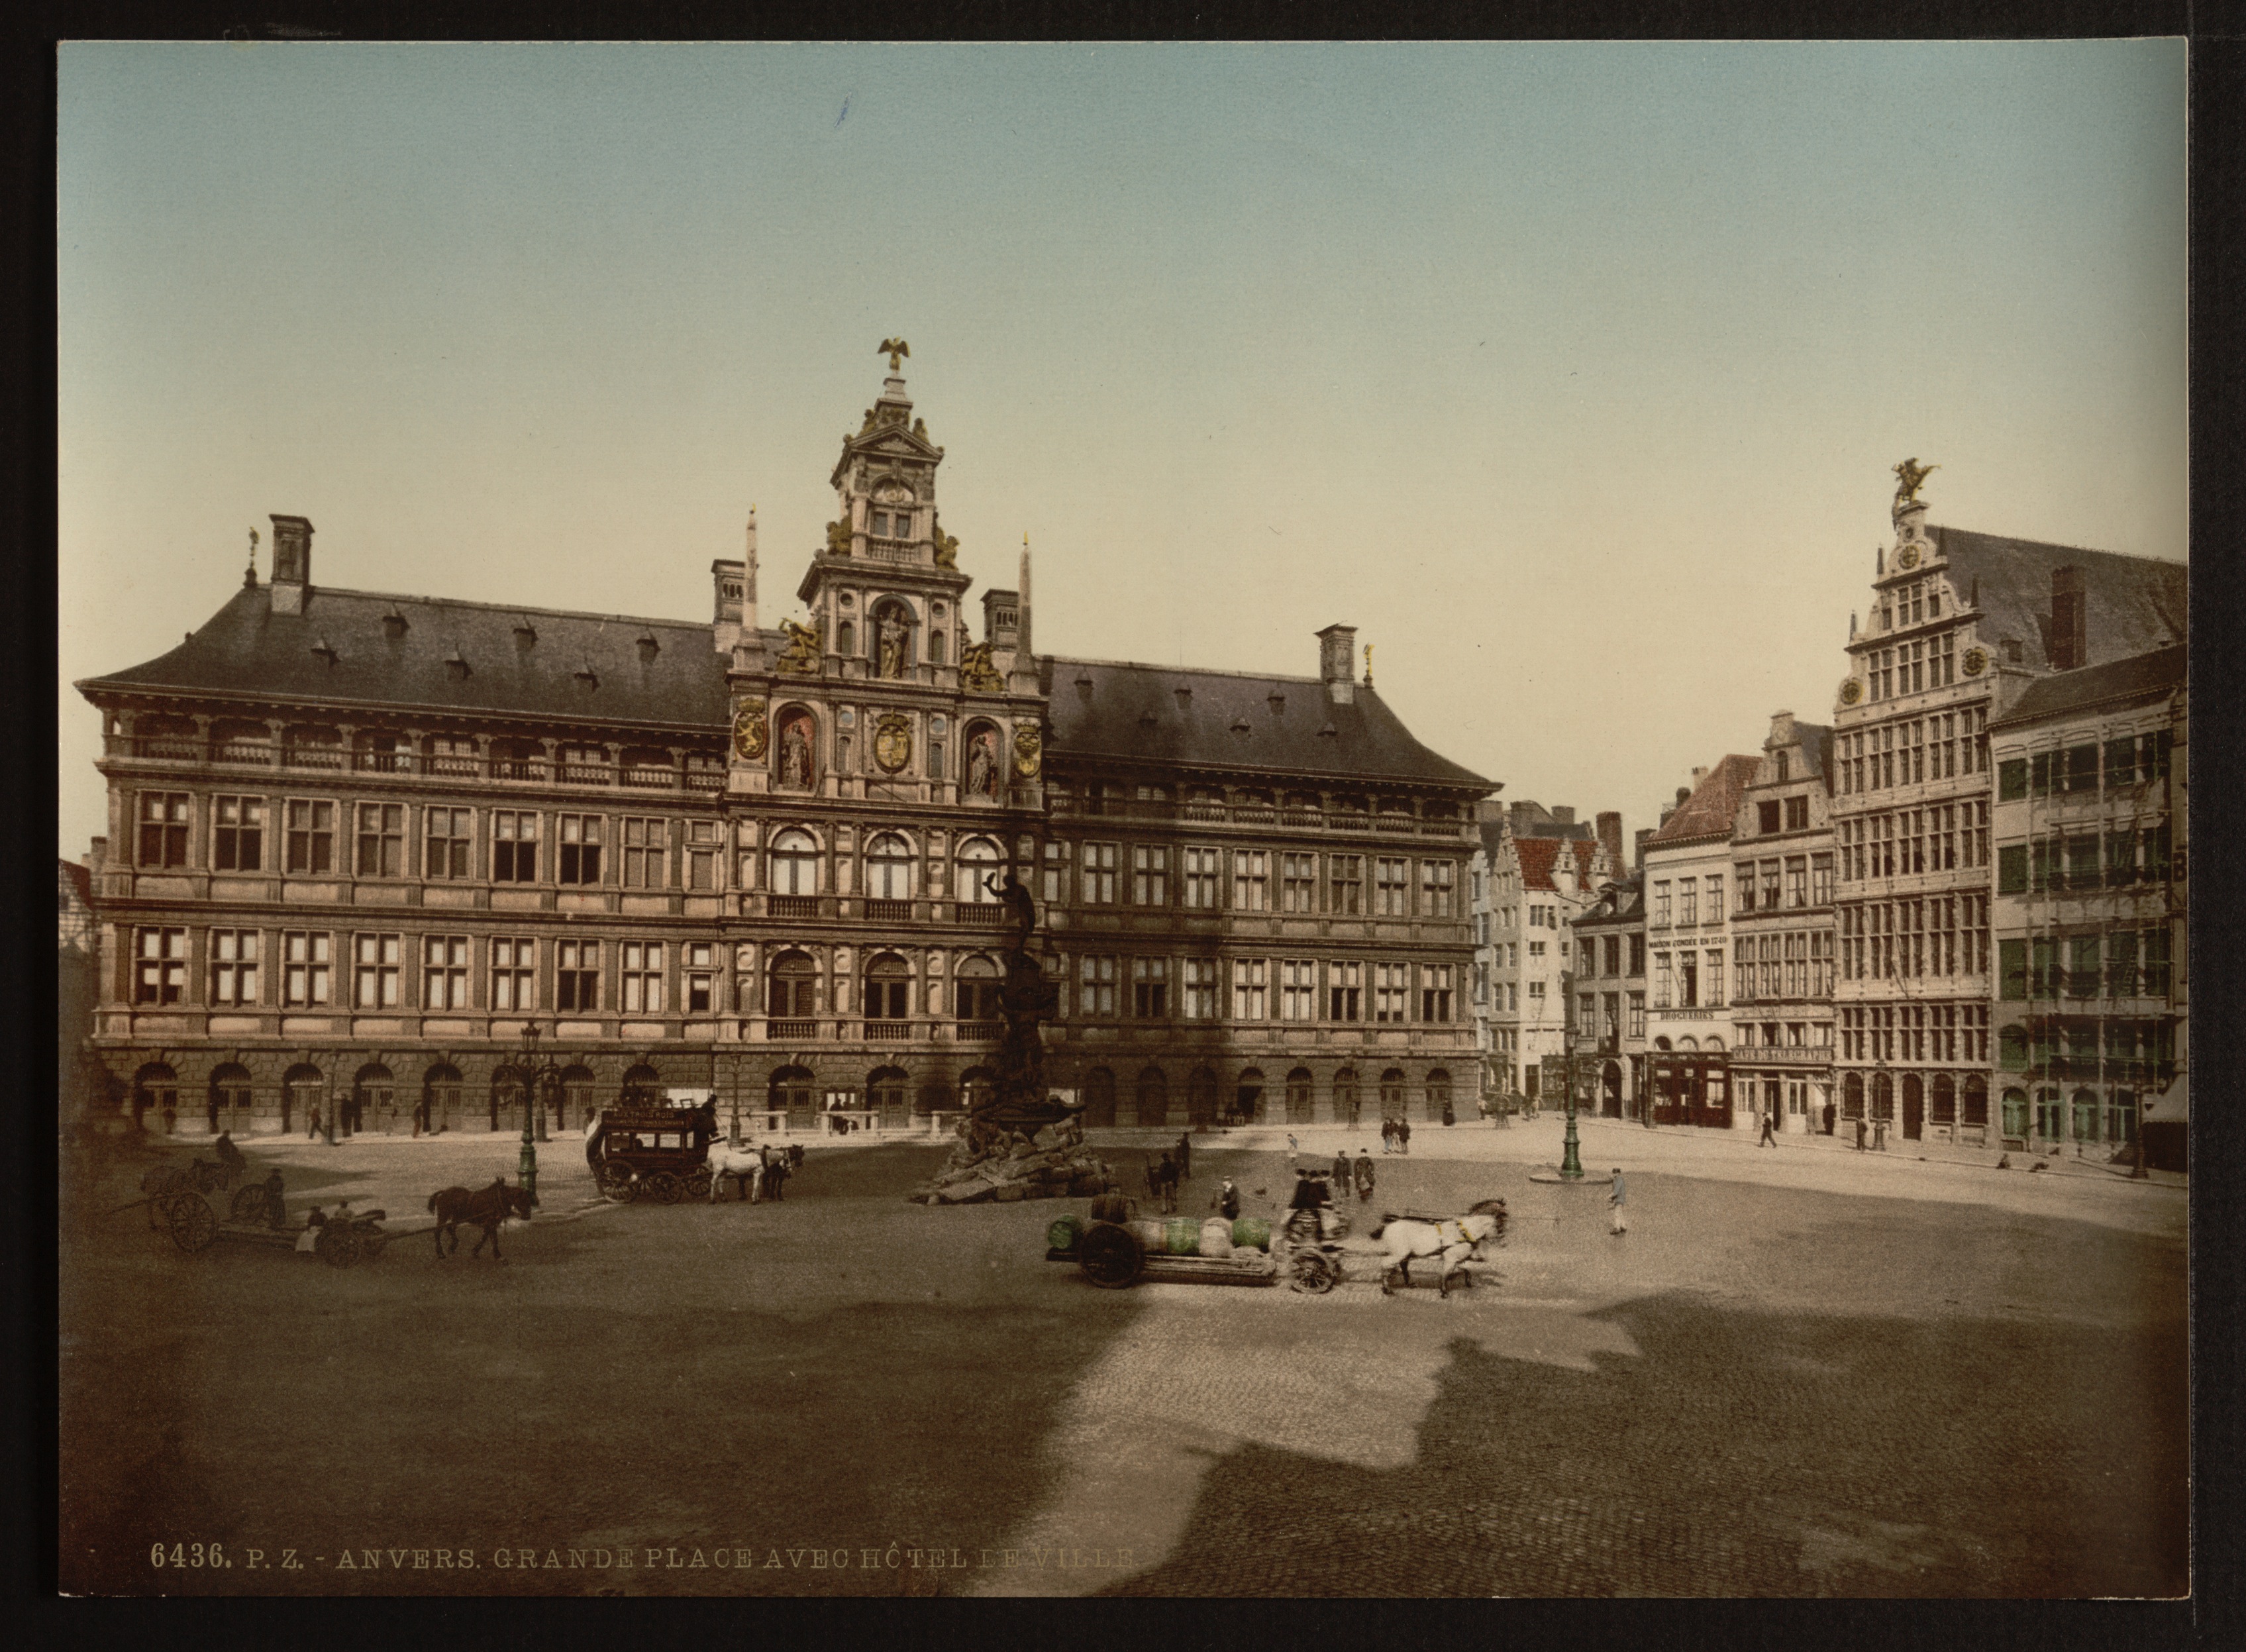 Grande Place with city hall, Antwerp, Belgium